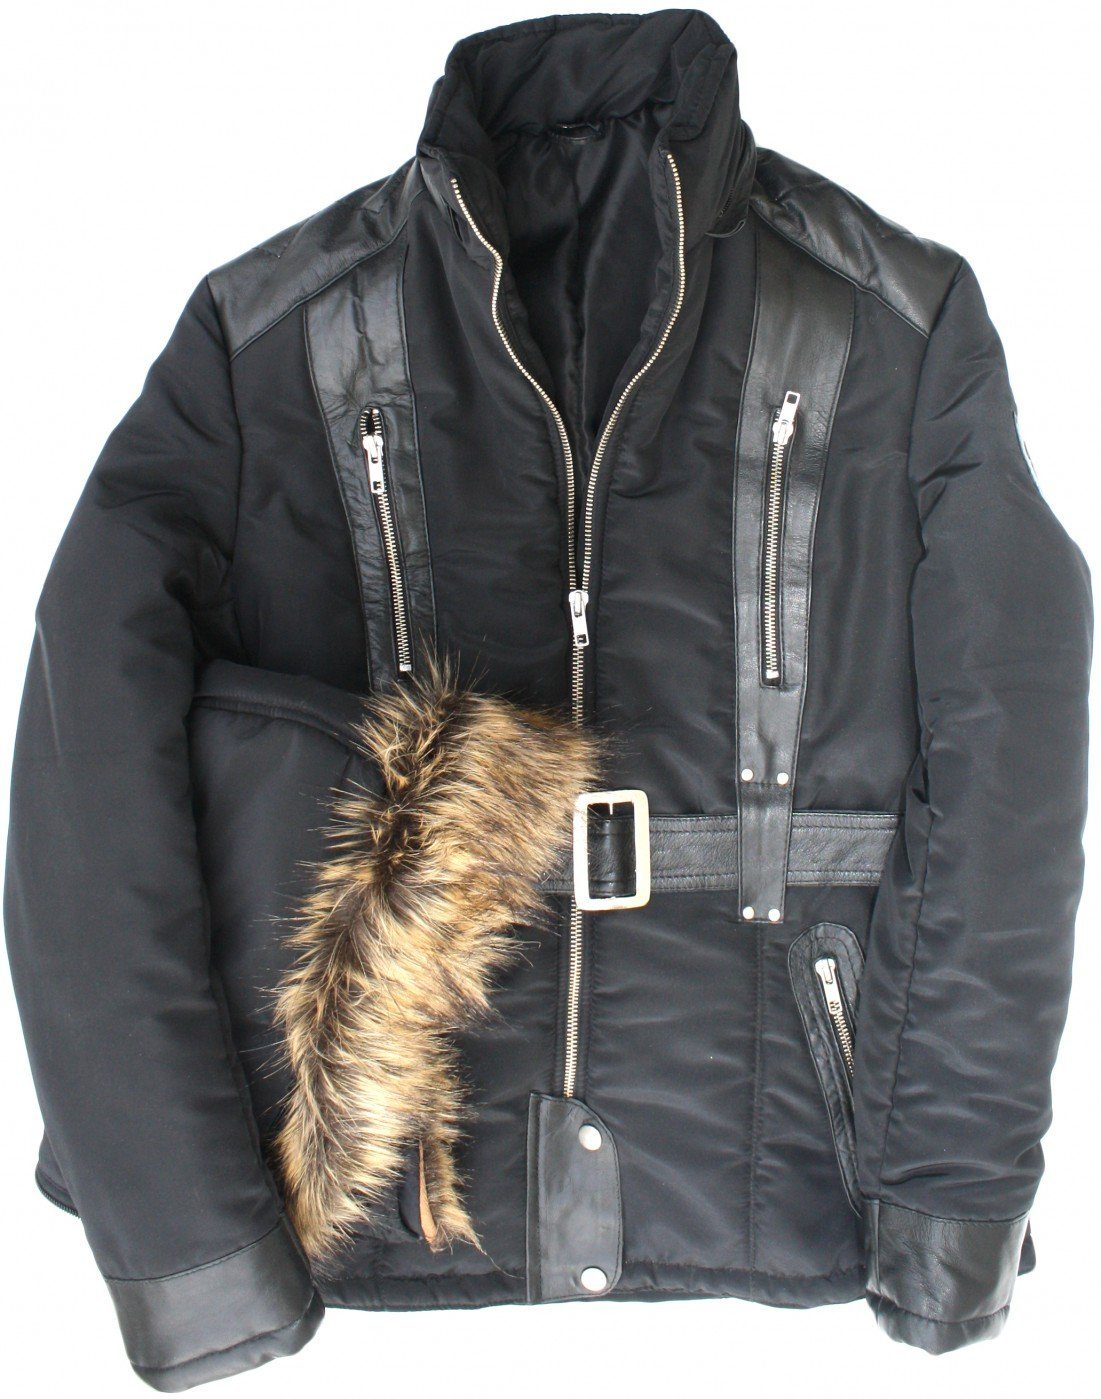 und Lederjacke Kurz aus 421J Schwarz Wear Trend Black Textilien German Damen Jacke Lammnappa